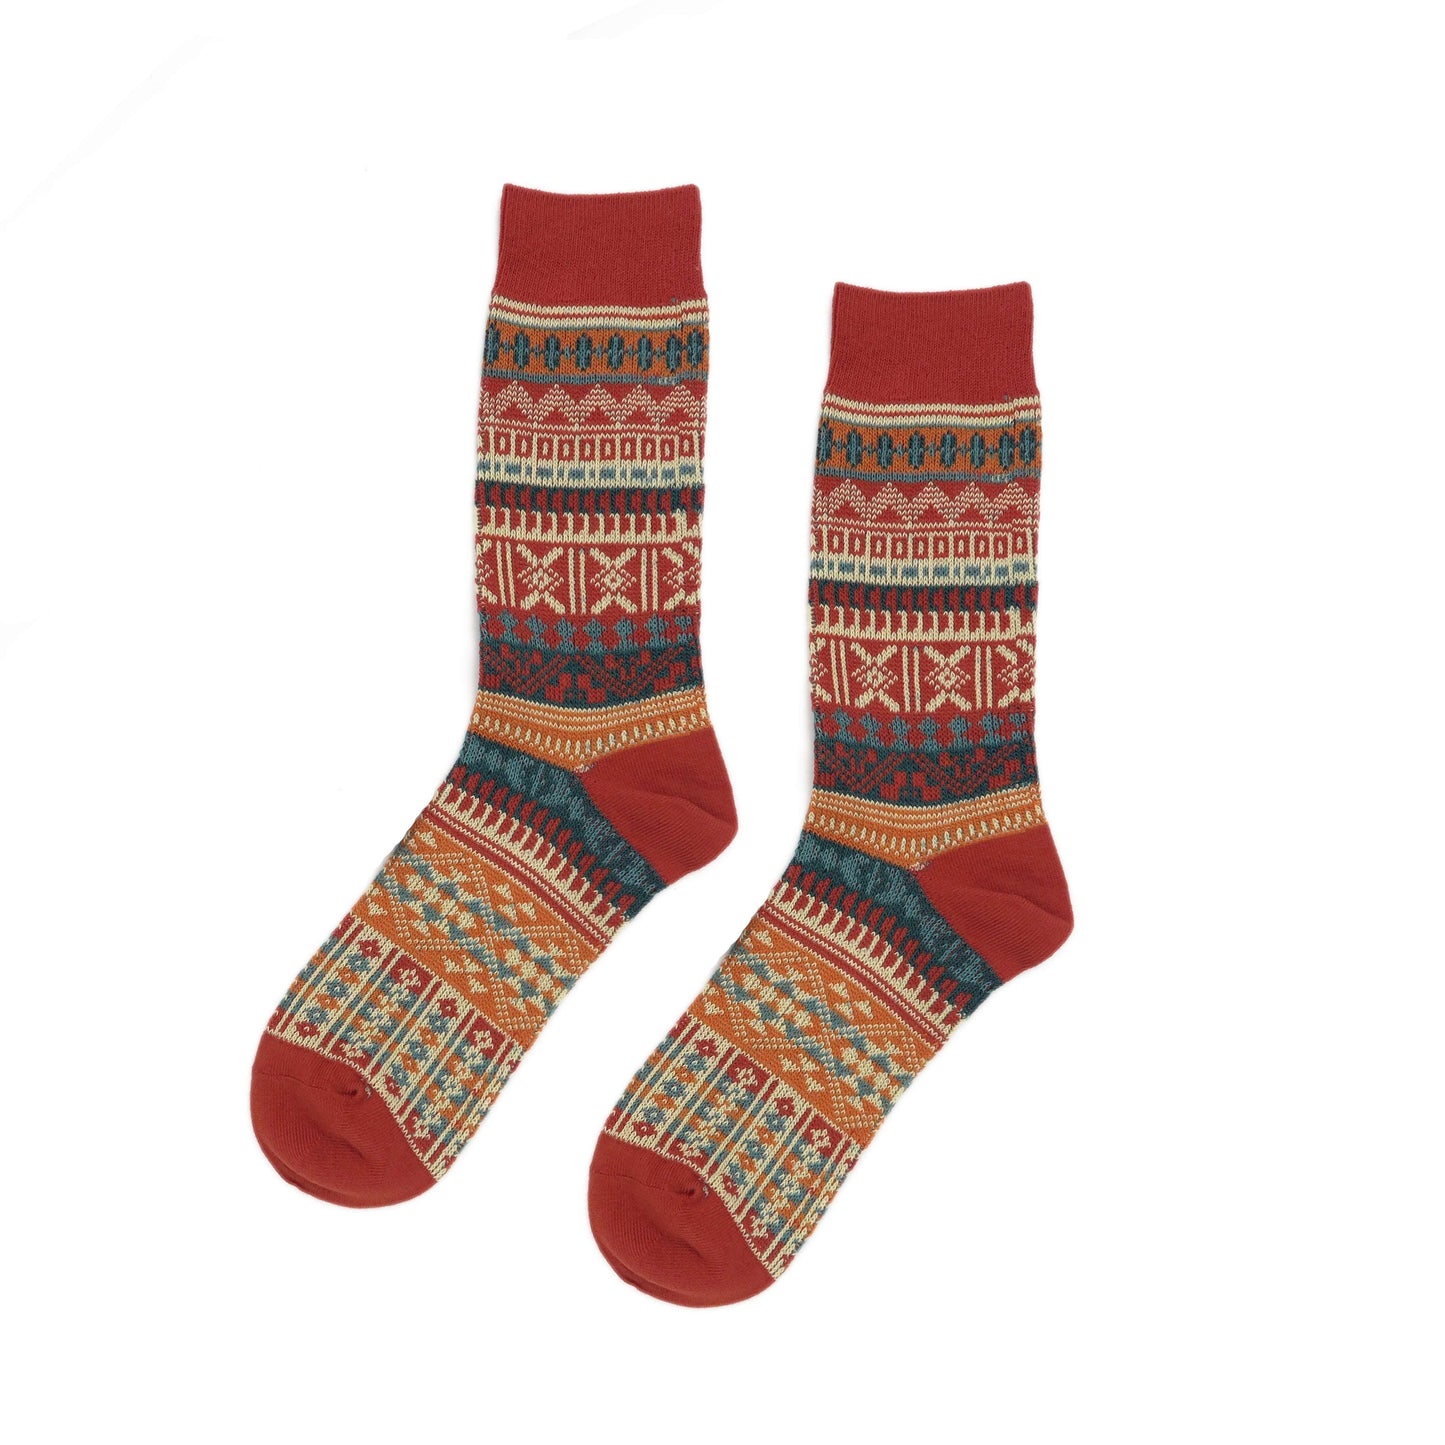 malaita socks - red tribal pattern socks - comfysocks